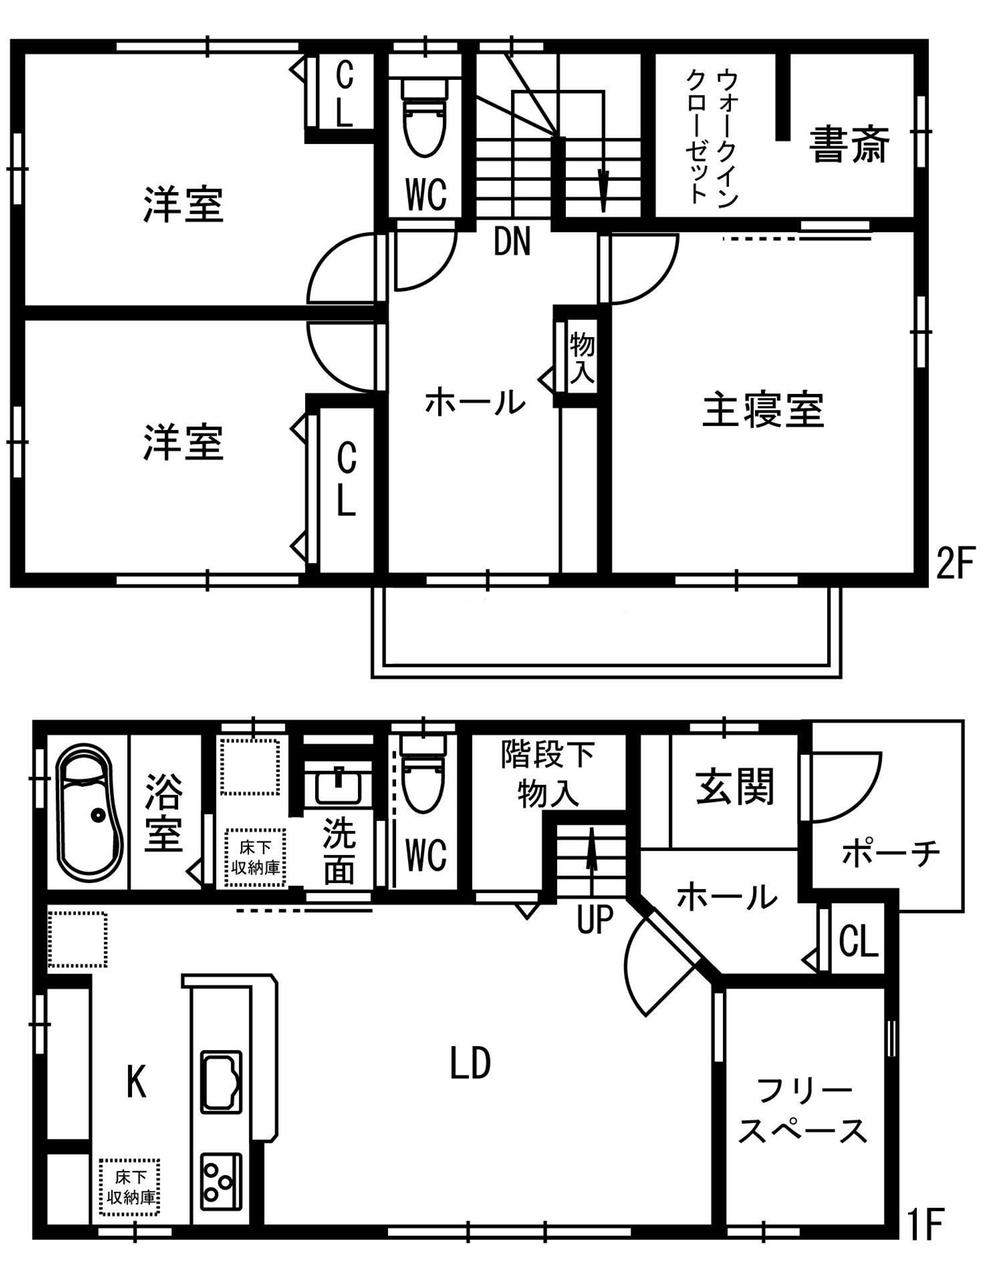 Floor plan. 26.5 million yen, 3LDK + S (storeroom), Land area 158.71 sq m , Building area 99.46 sq m